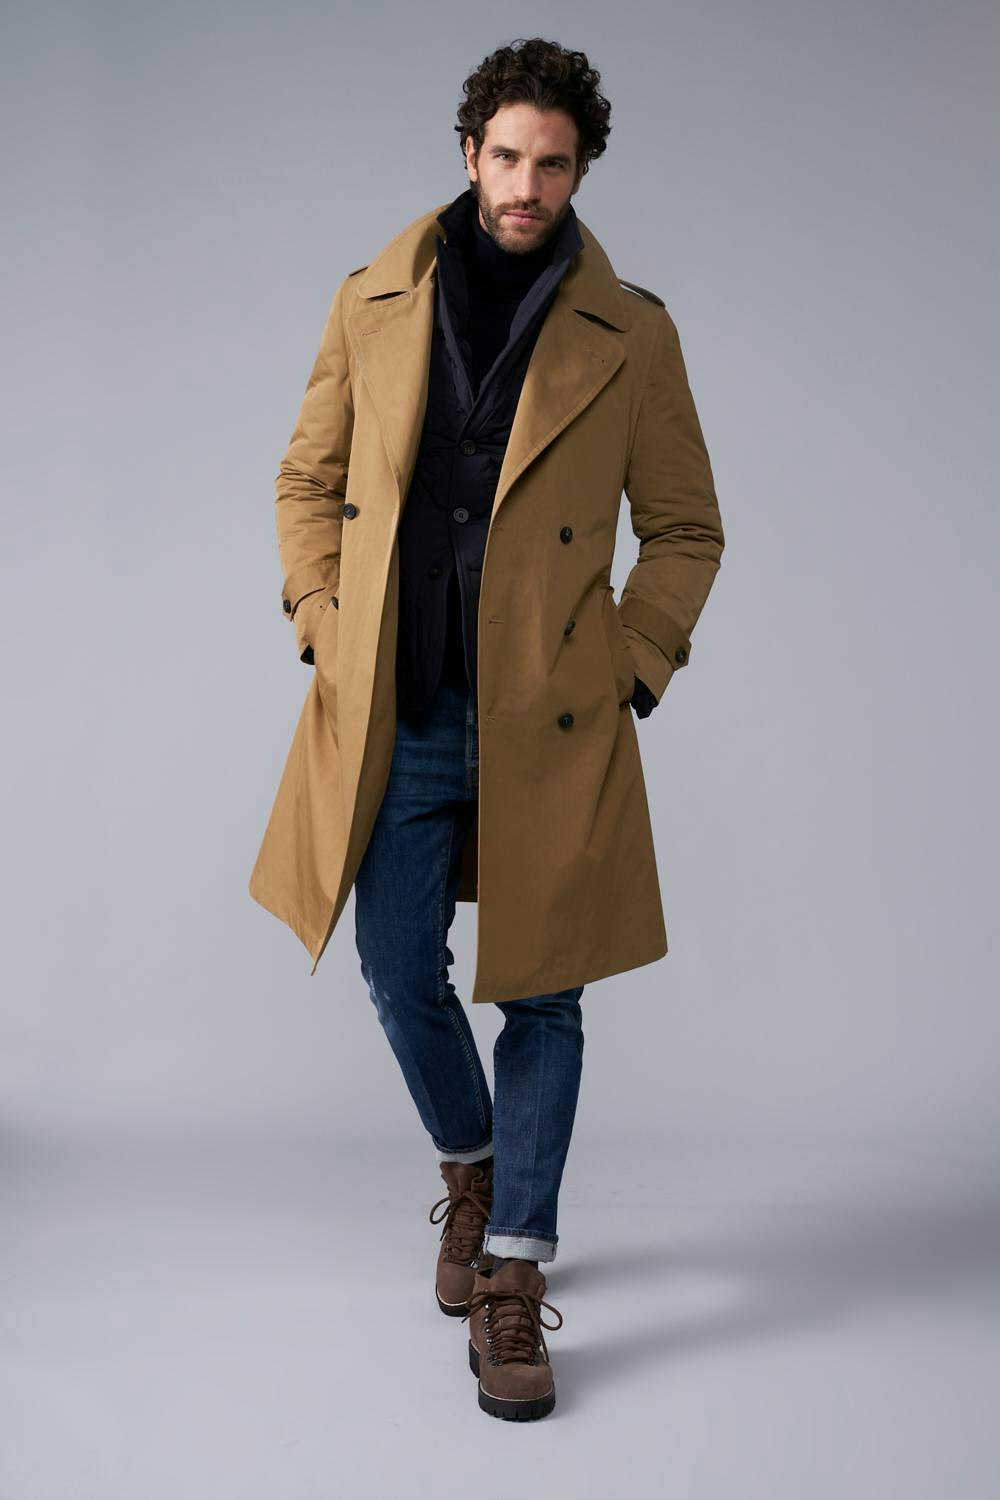 clothing apparel coat overcoat trench coat person human